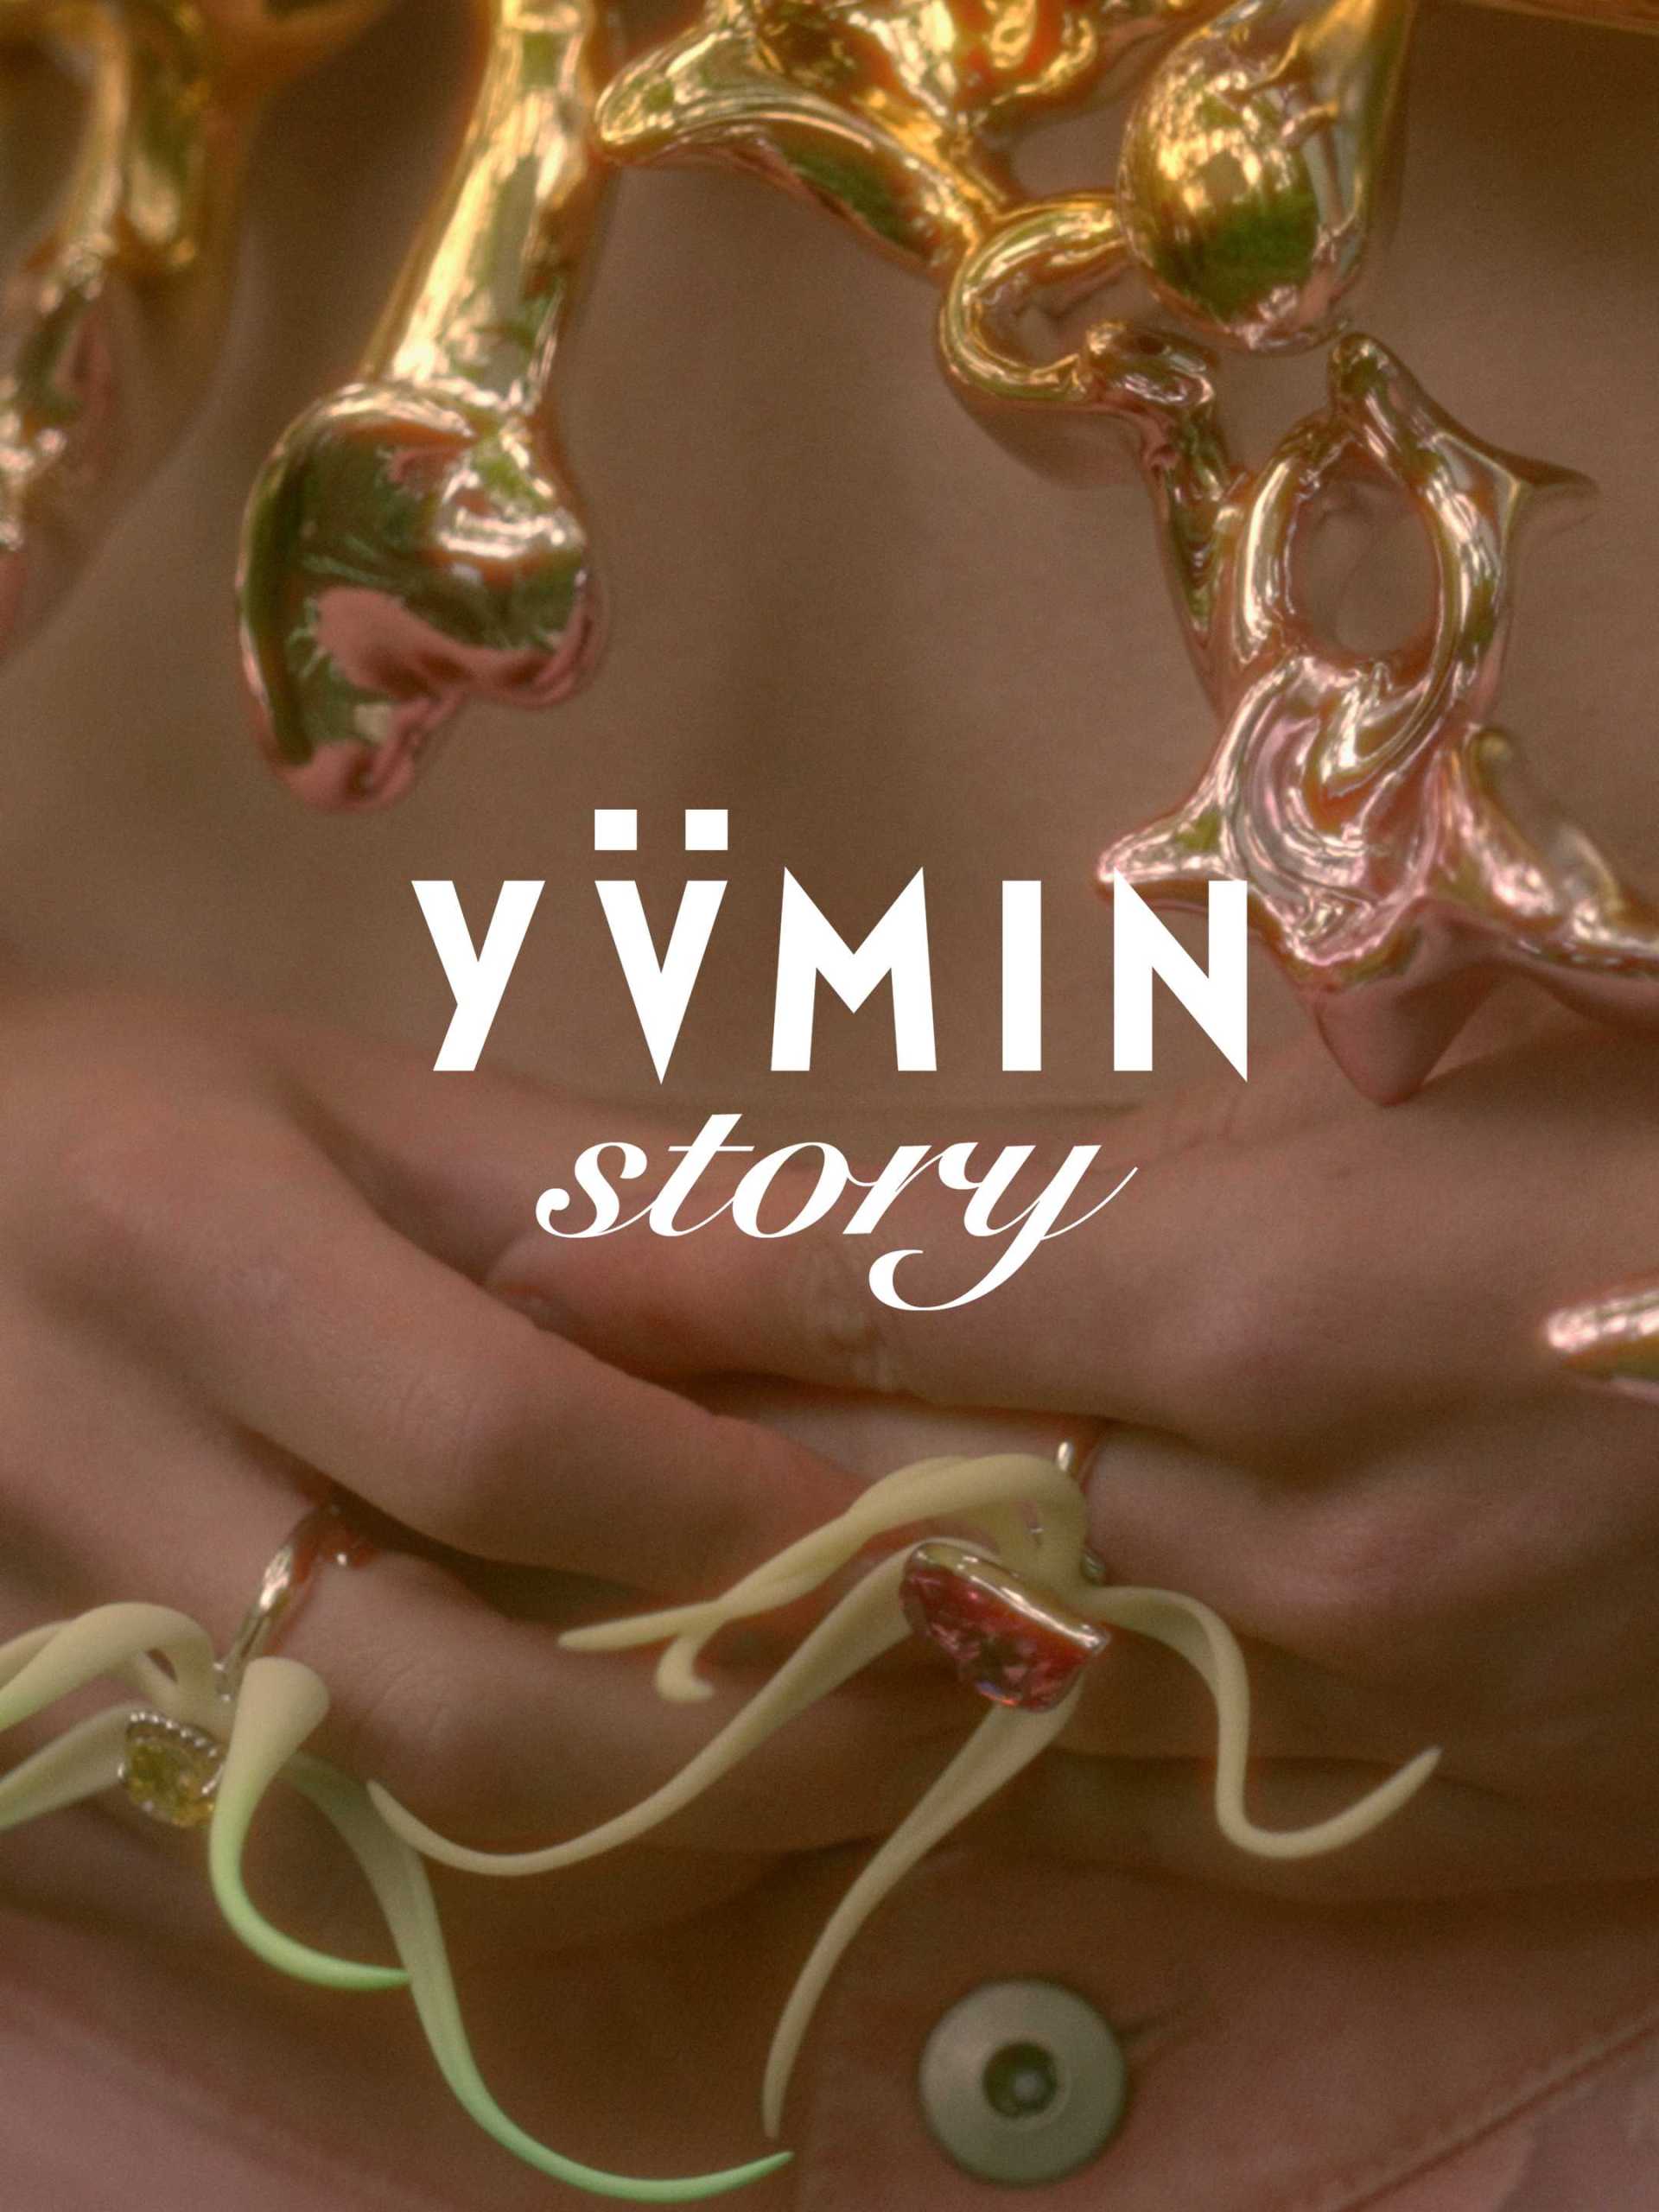 Yvmin尤目 概念首饰 - Story Video “DAWN” - 竖屏